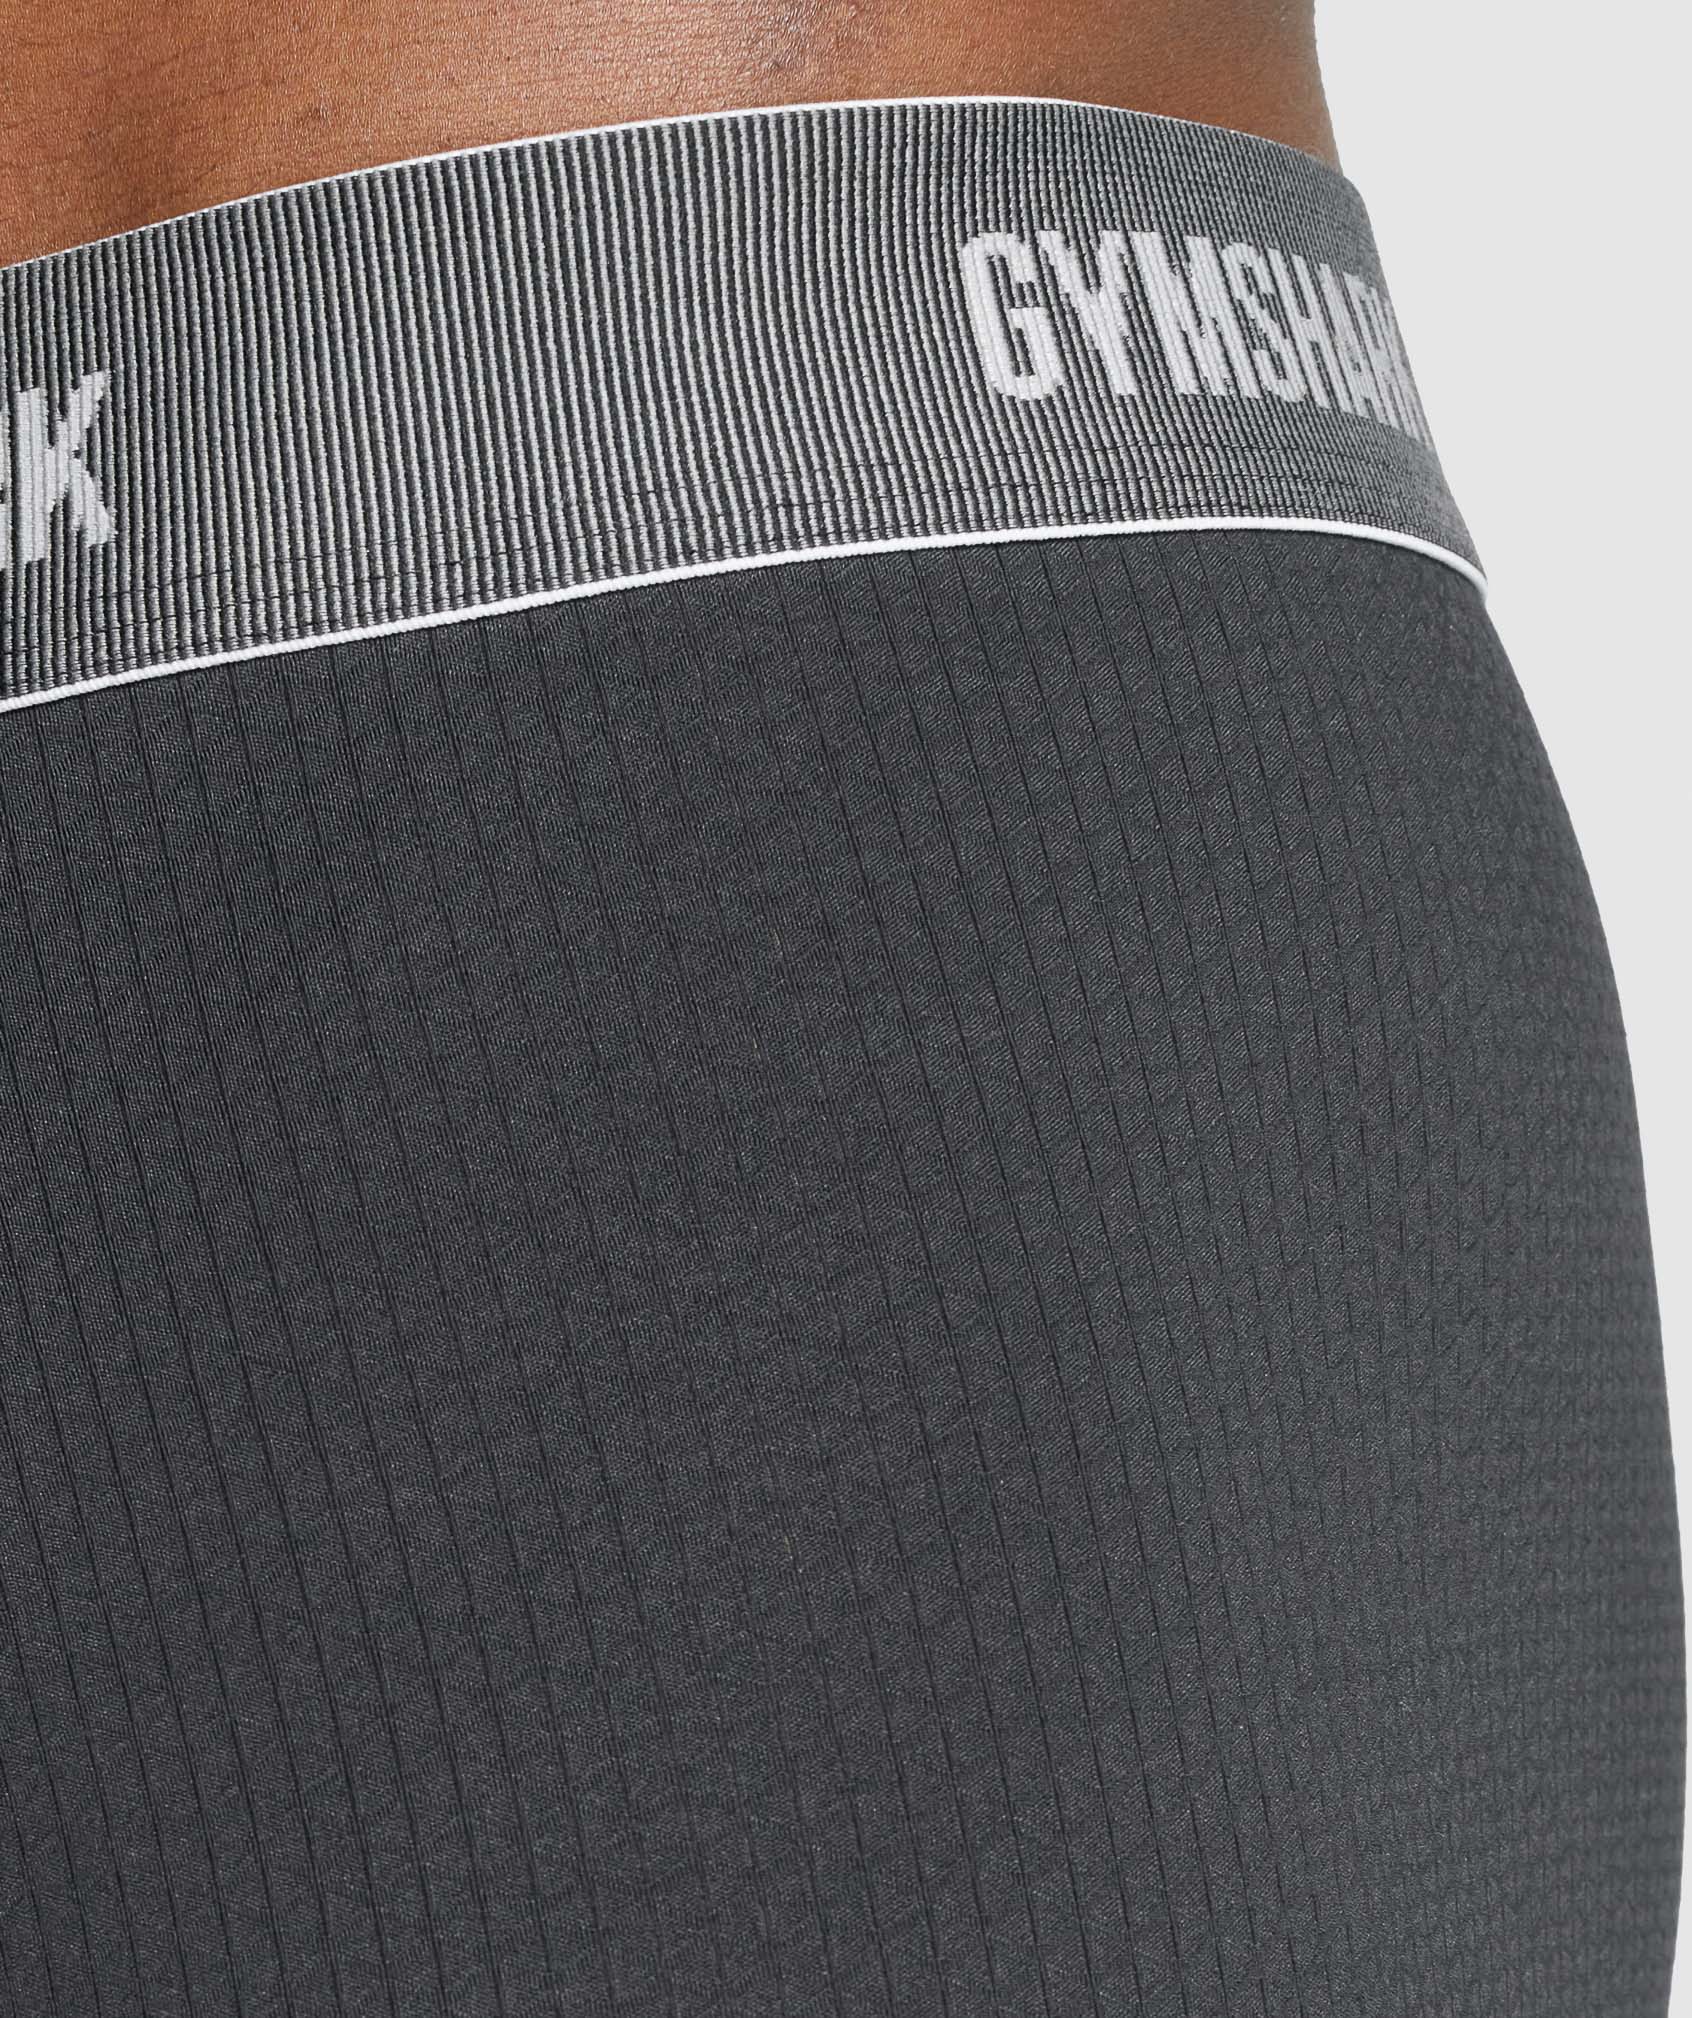 Gymshark Mens Gray Underwear Size Medium